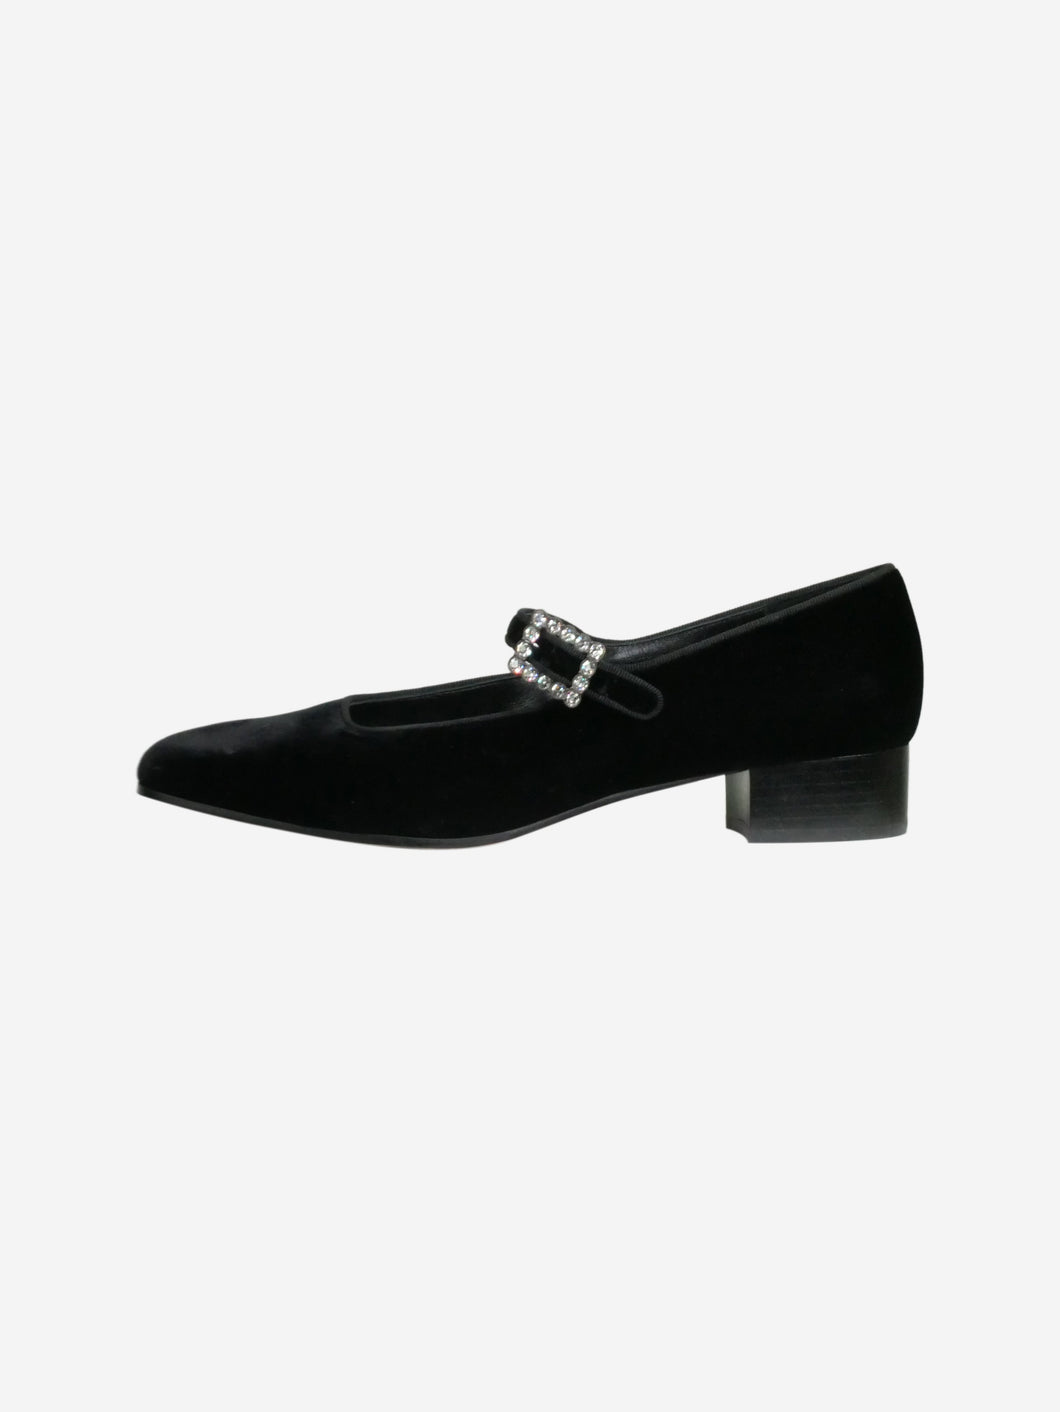 Black velvet Mary Jane heeled shoes - size EU 42 Flat Shoes Le Monde Beryl 